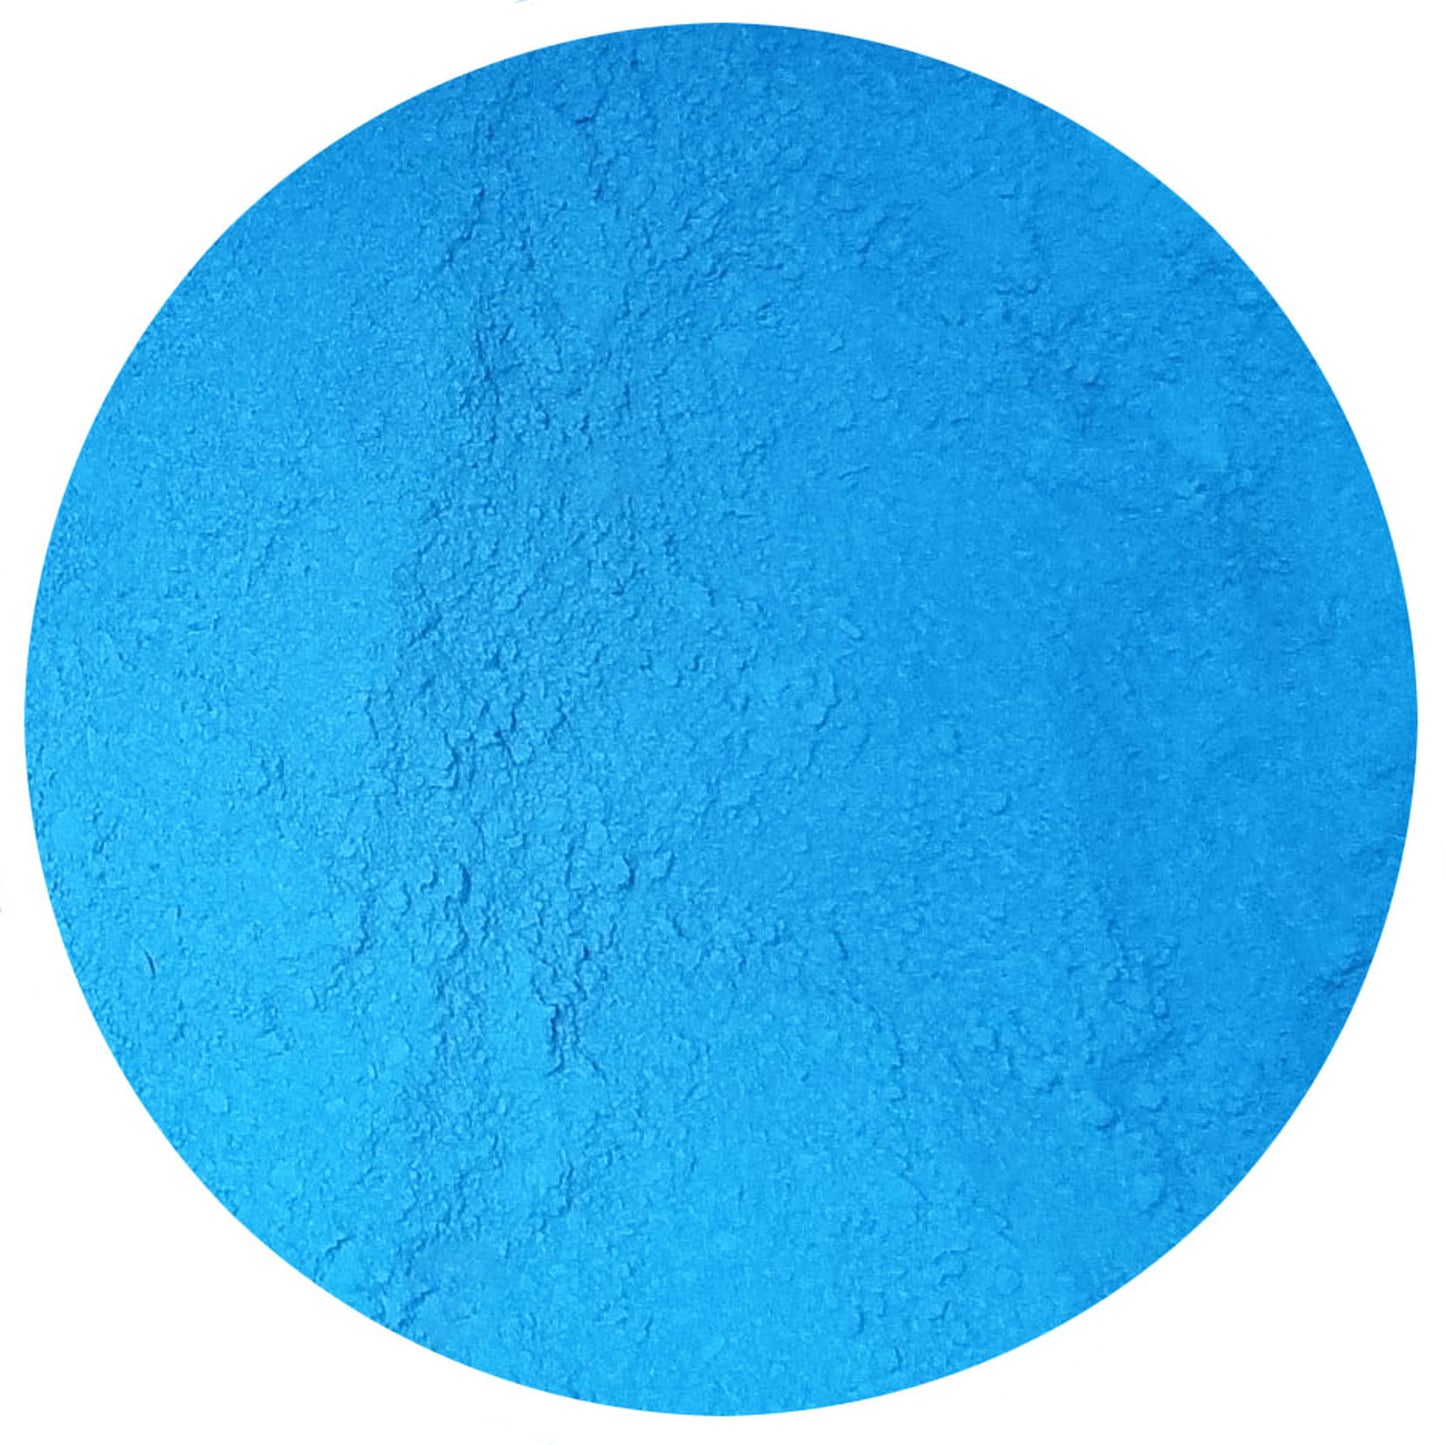 Neon Blue | Fluorescent Pigment Dye | Candles, Wax Melt, Cosmetics, Bath Bombs, Shower Gel | Truly Personal